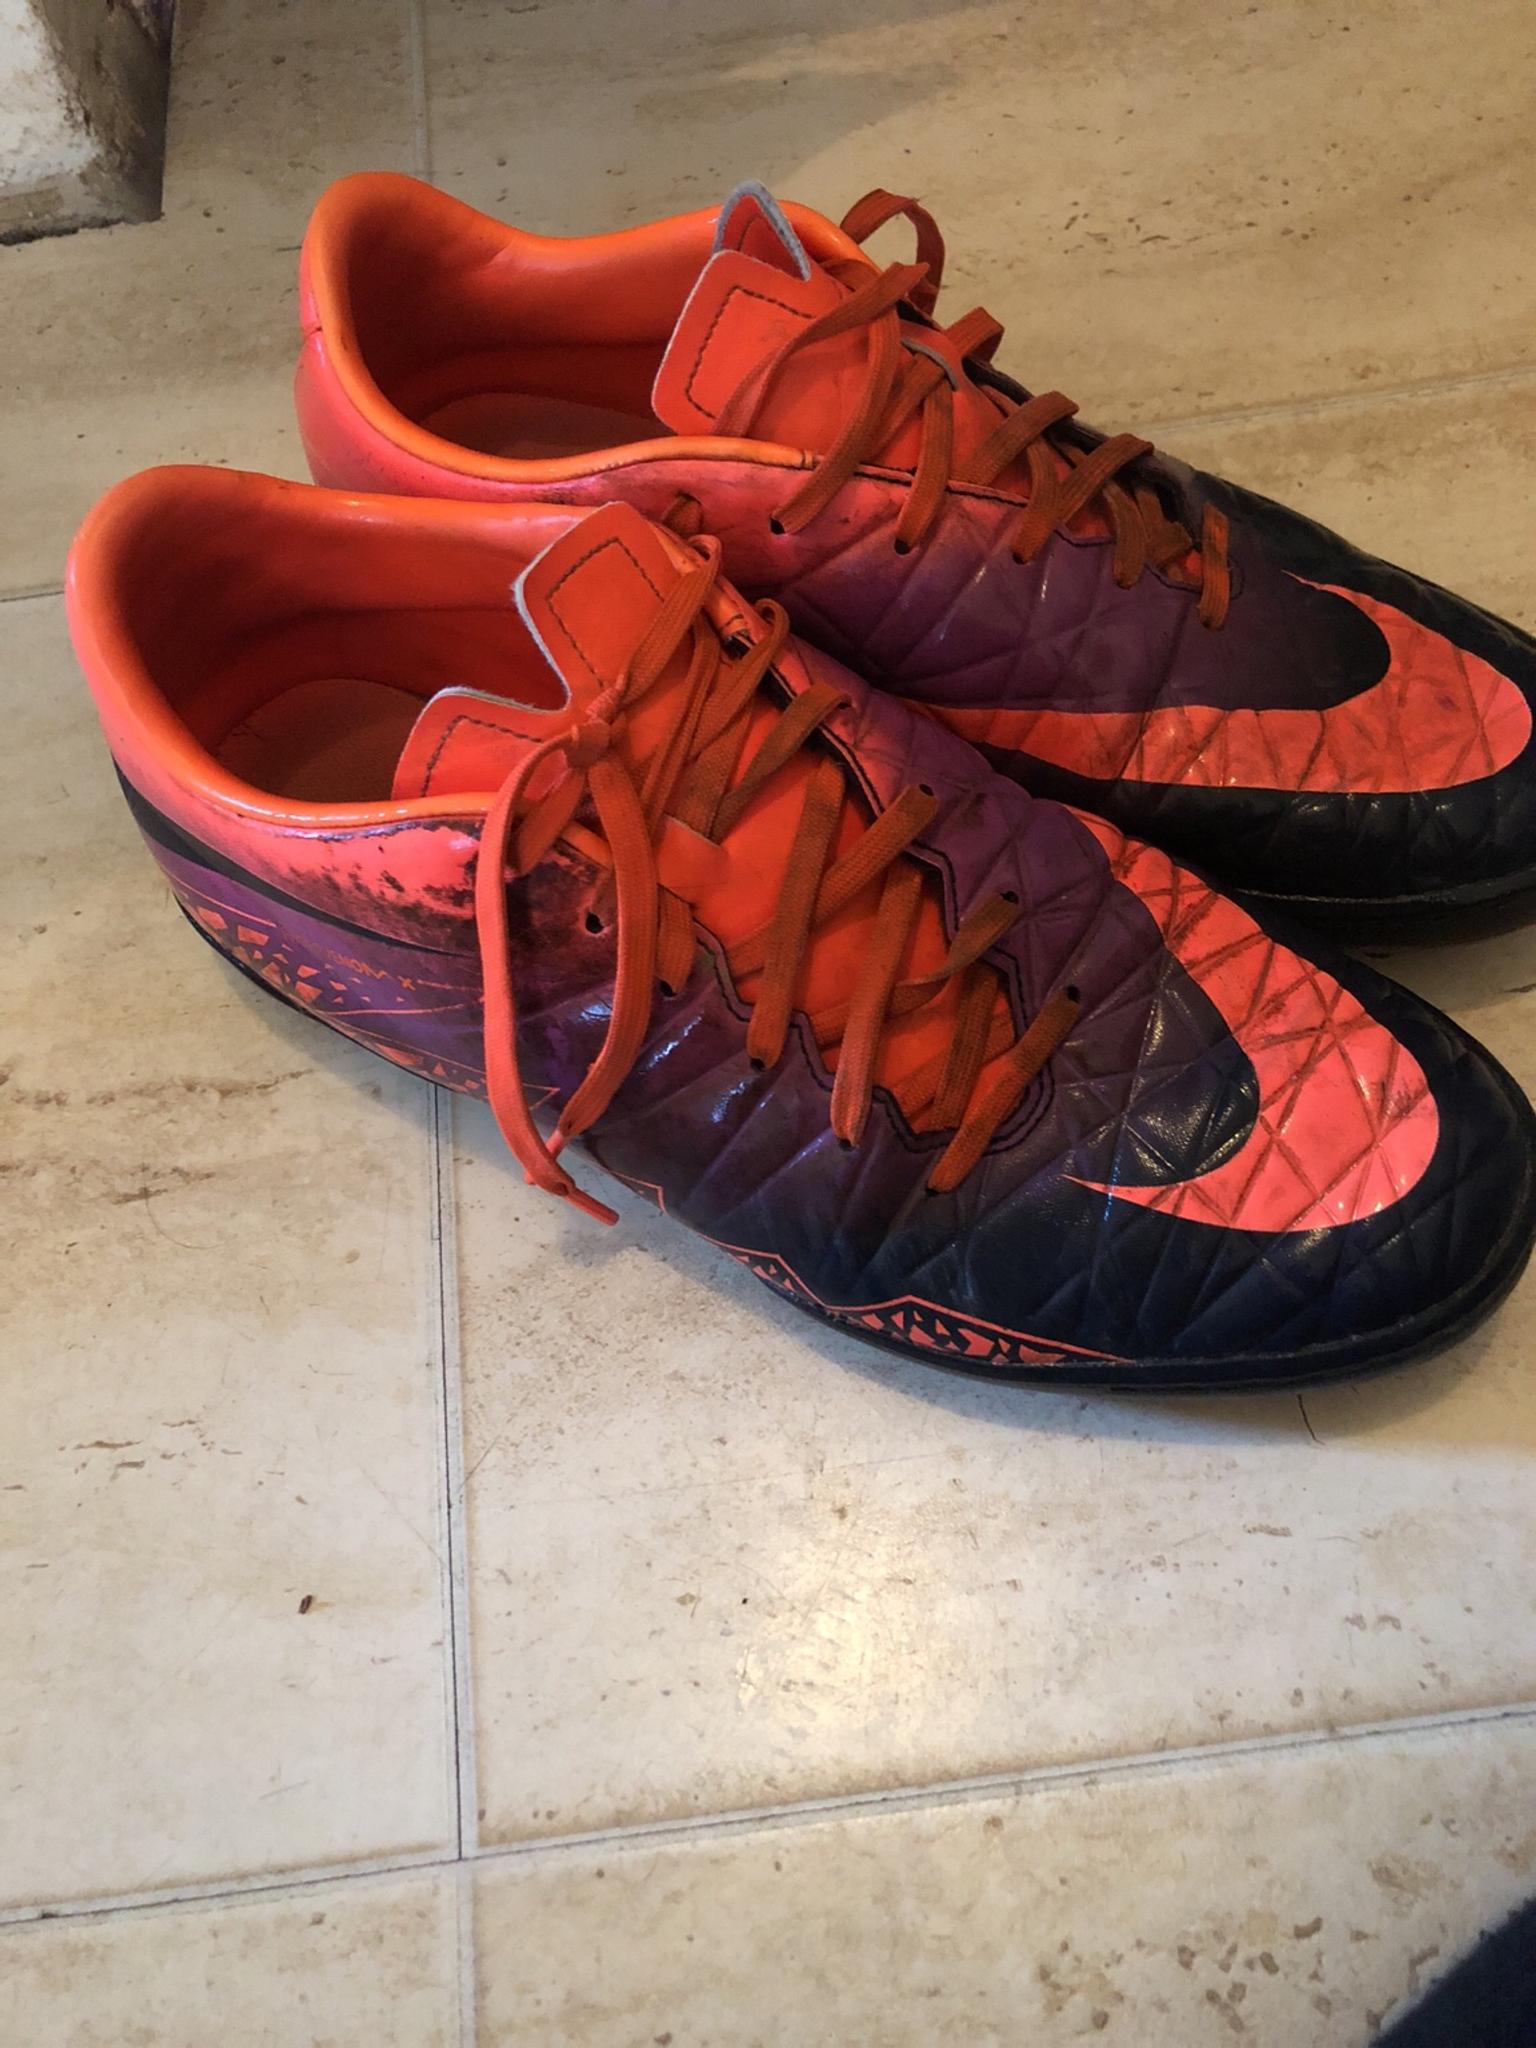 Nike HypervenomX Phelon III Indoor Soccer Shoes eBay